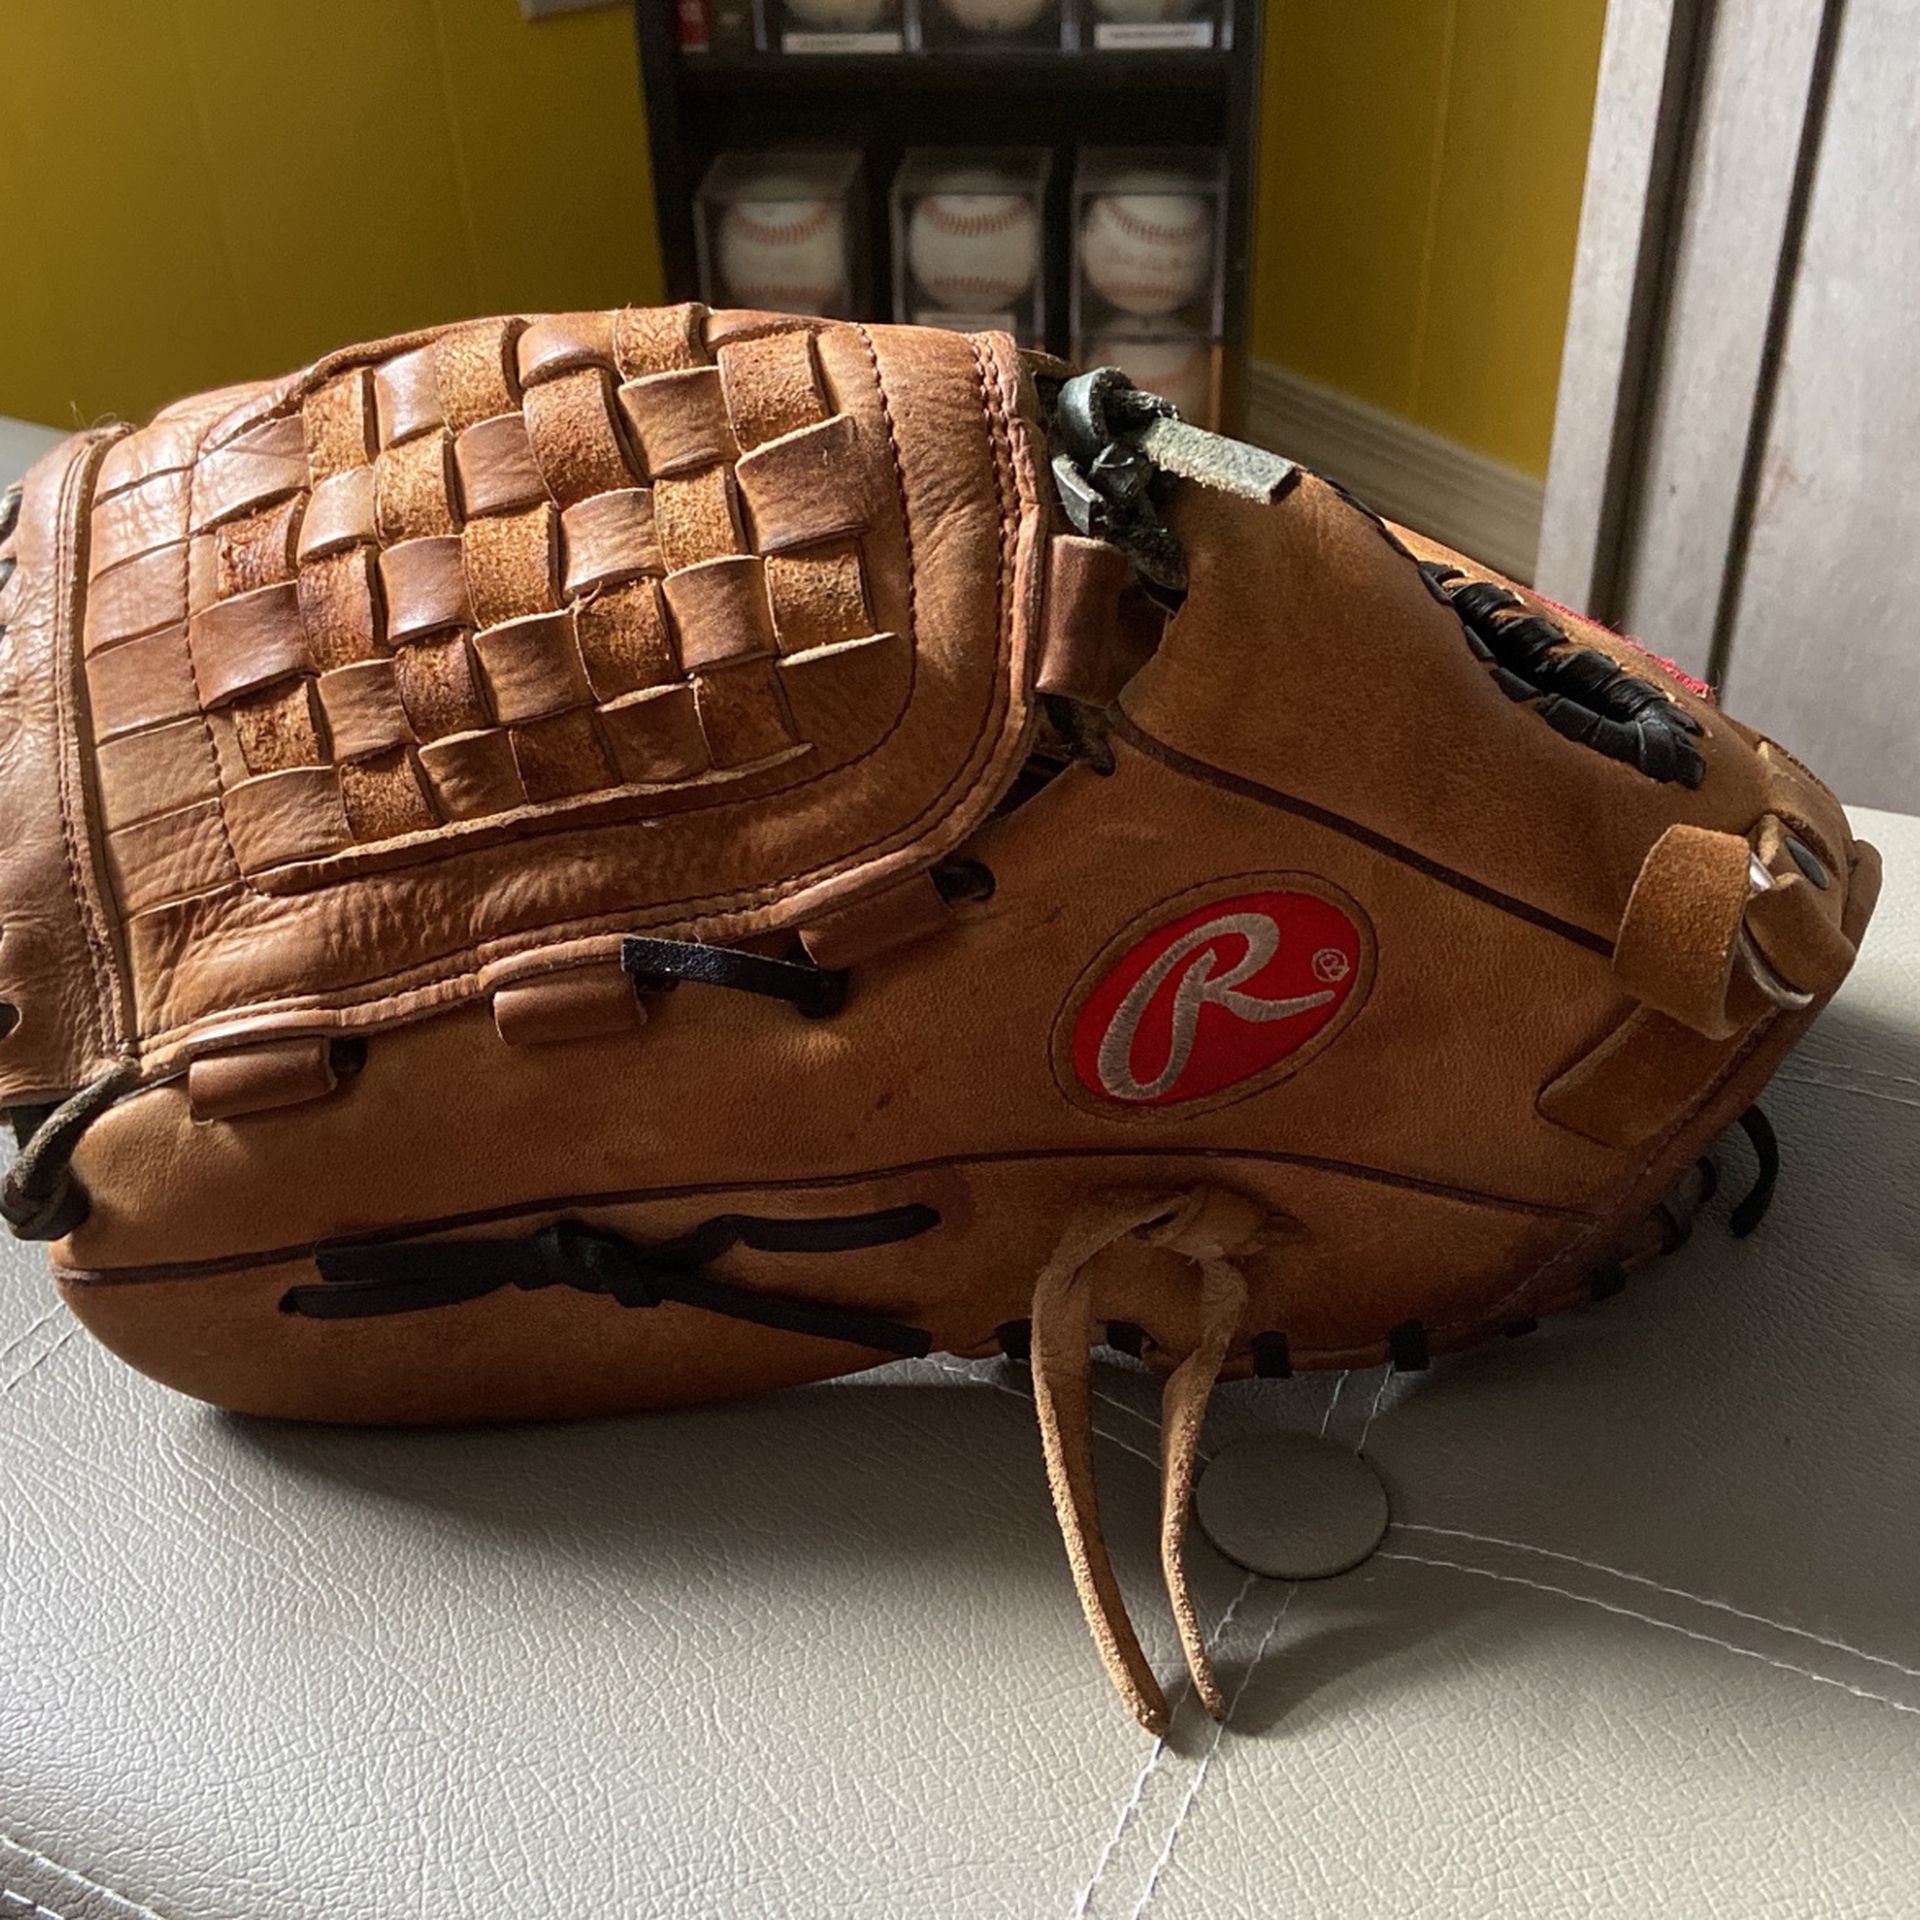 Rawlings Sandlot 13” LHT Softball Glove